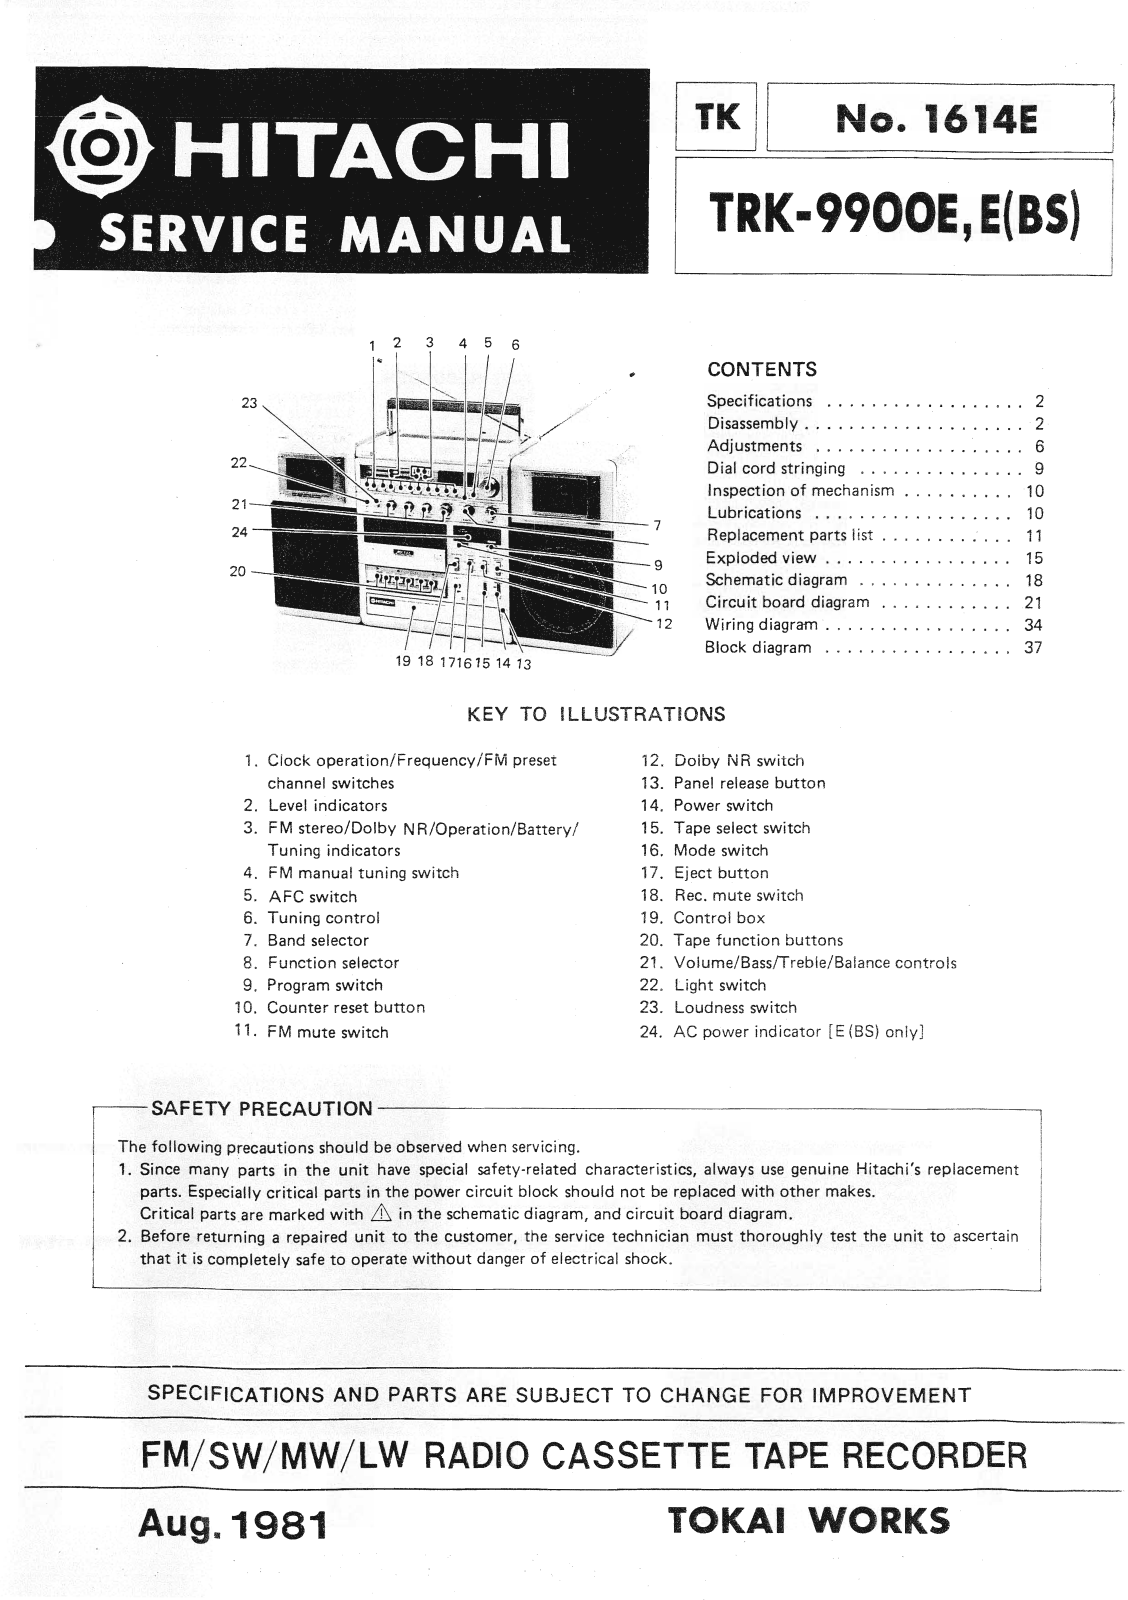 Hitachi TRK-9900-E Service Manual